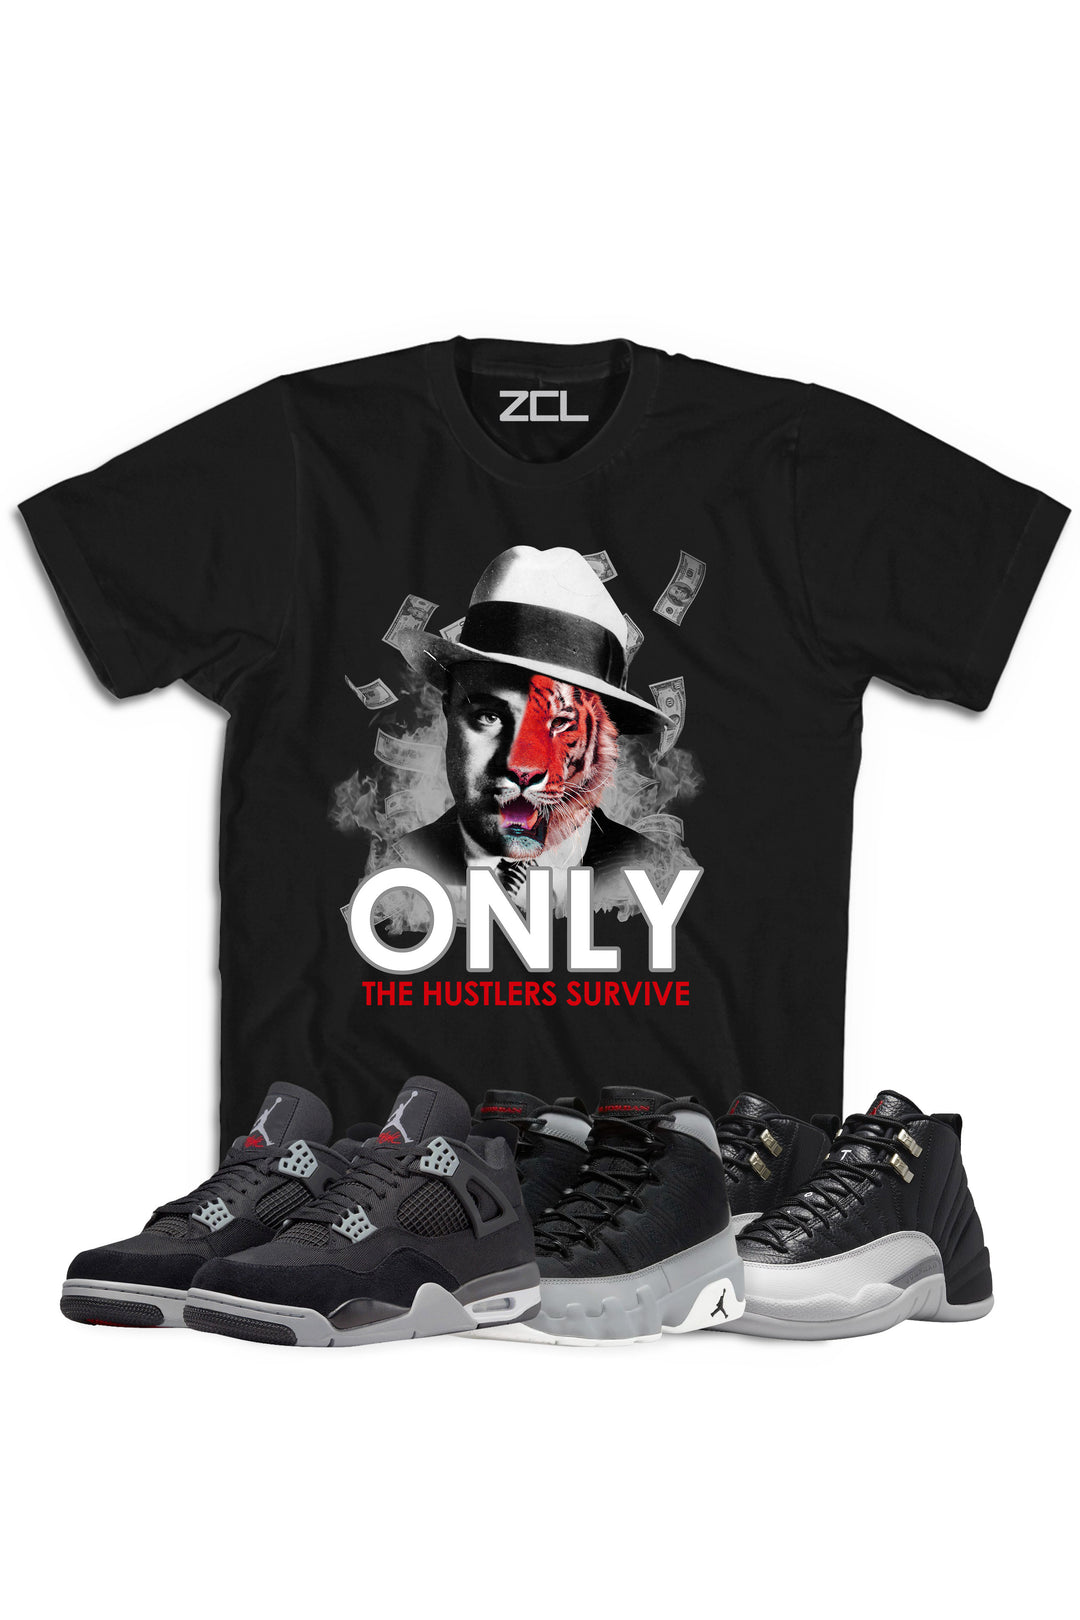 Air Jordan "Only The Hustlers" Tee Black Canvas - Zamage